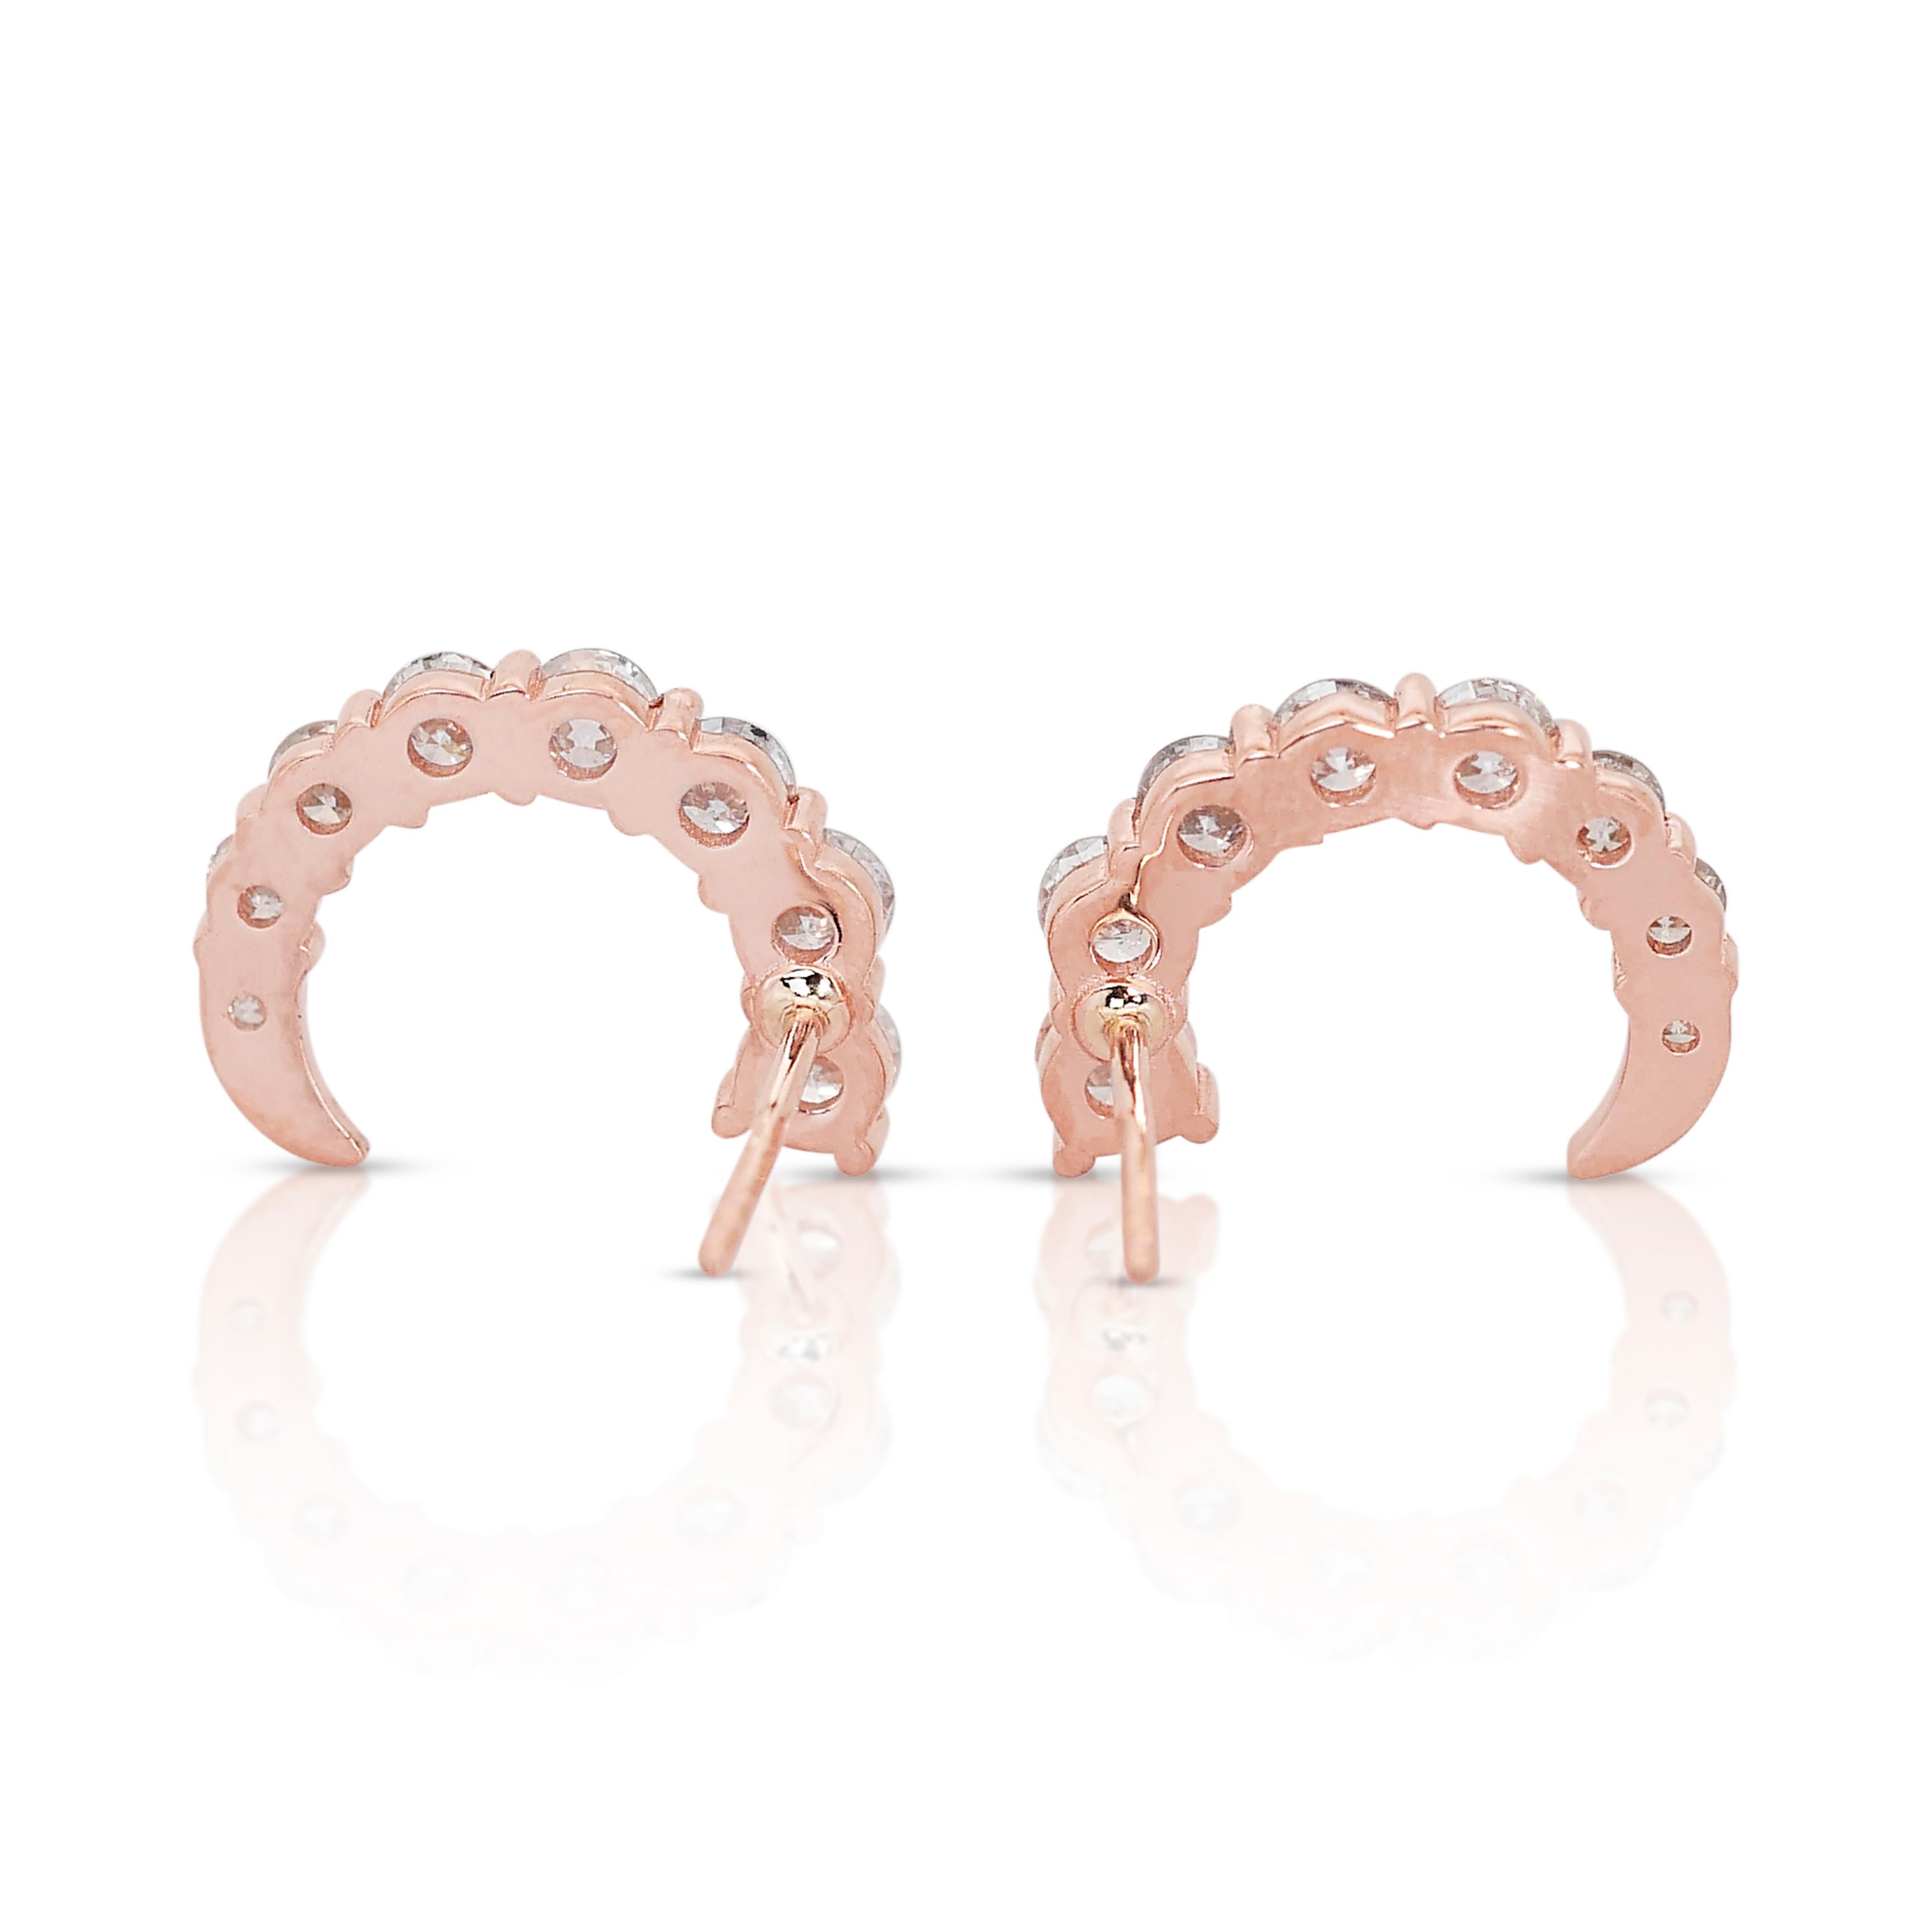 Fascinating 14k Rose Gold Natural Diamond Hoop Earrings w/1.85 ct -IGI Certified 2